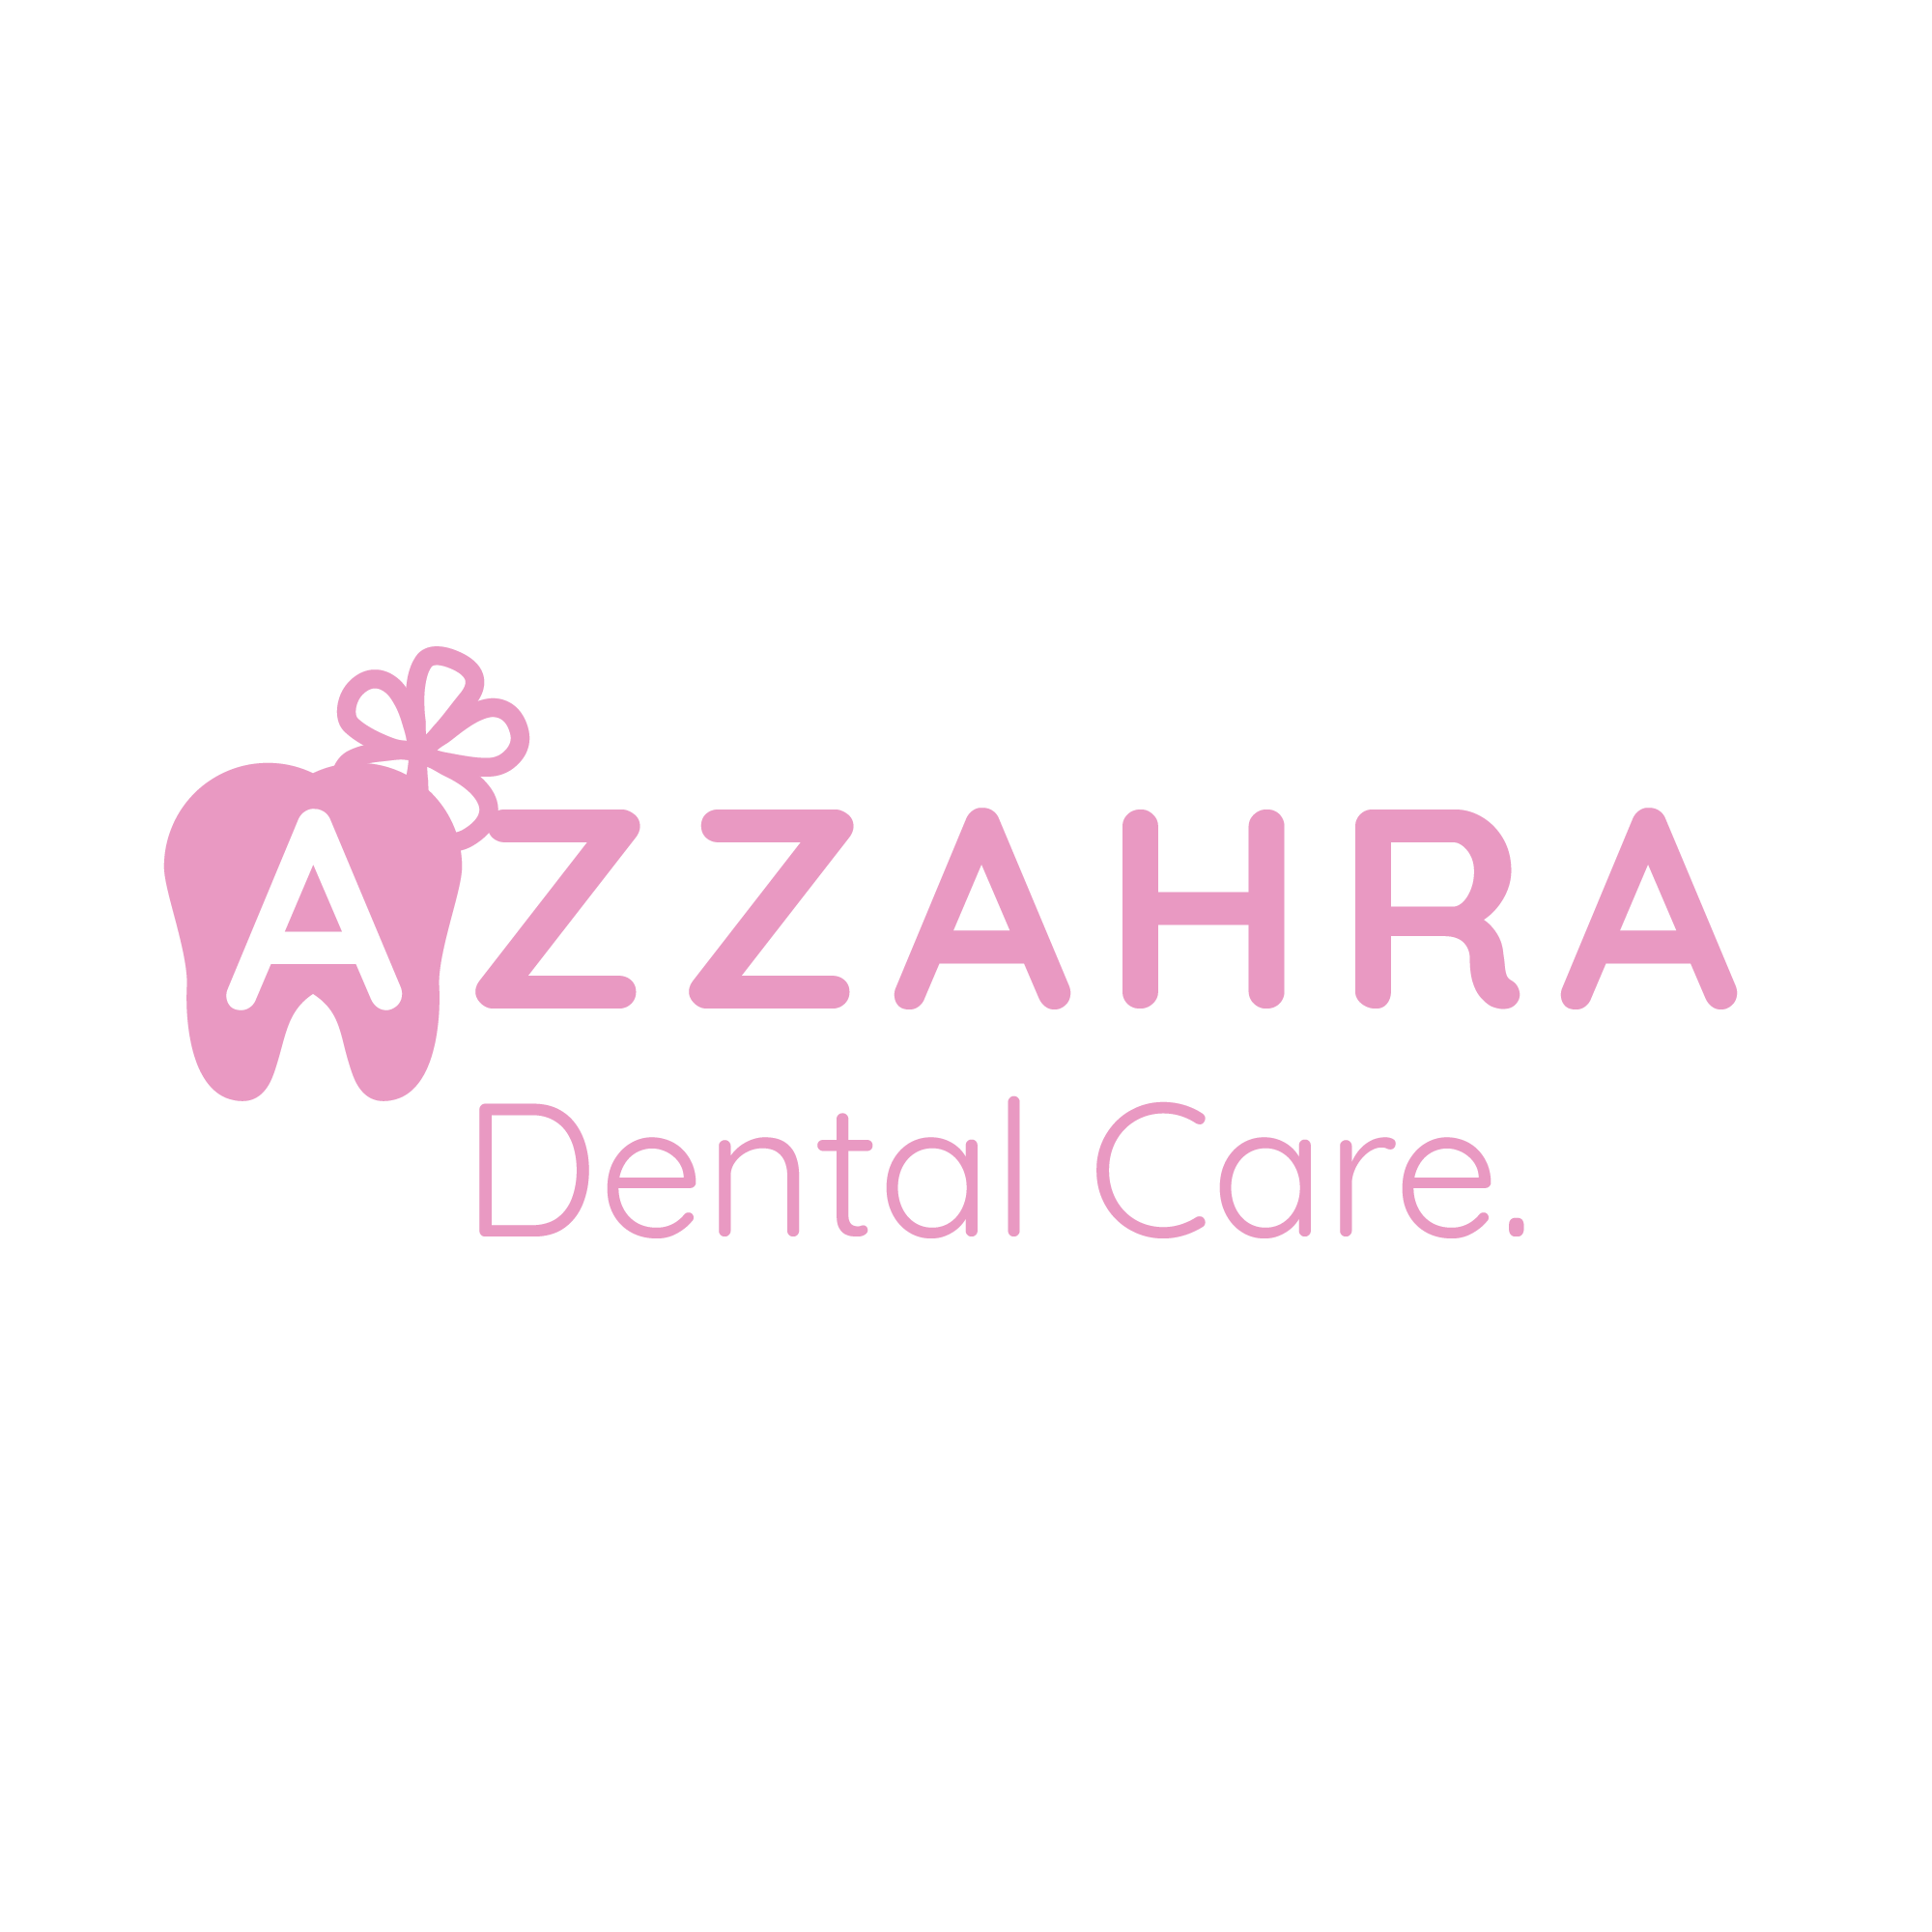 Azzahra Dental Care